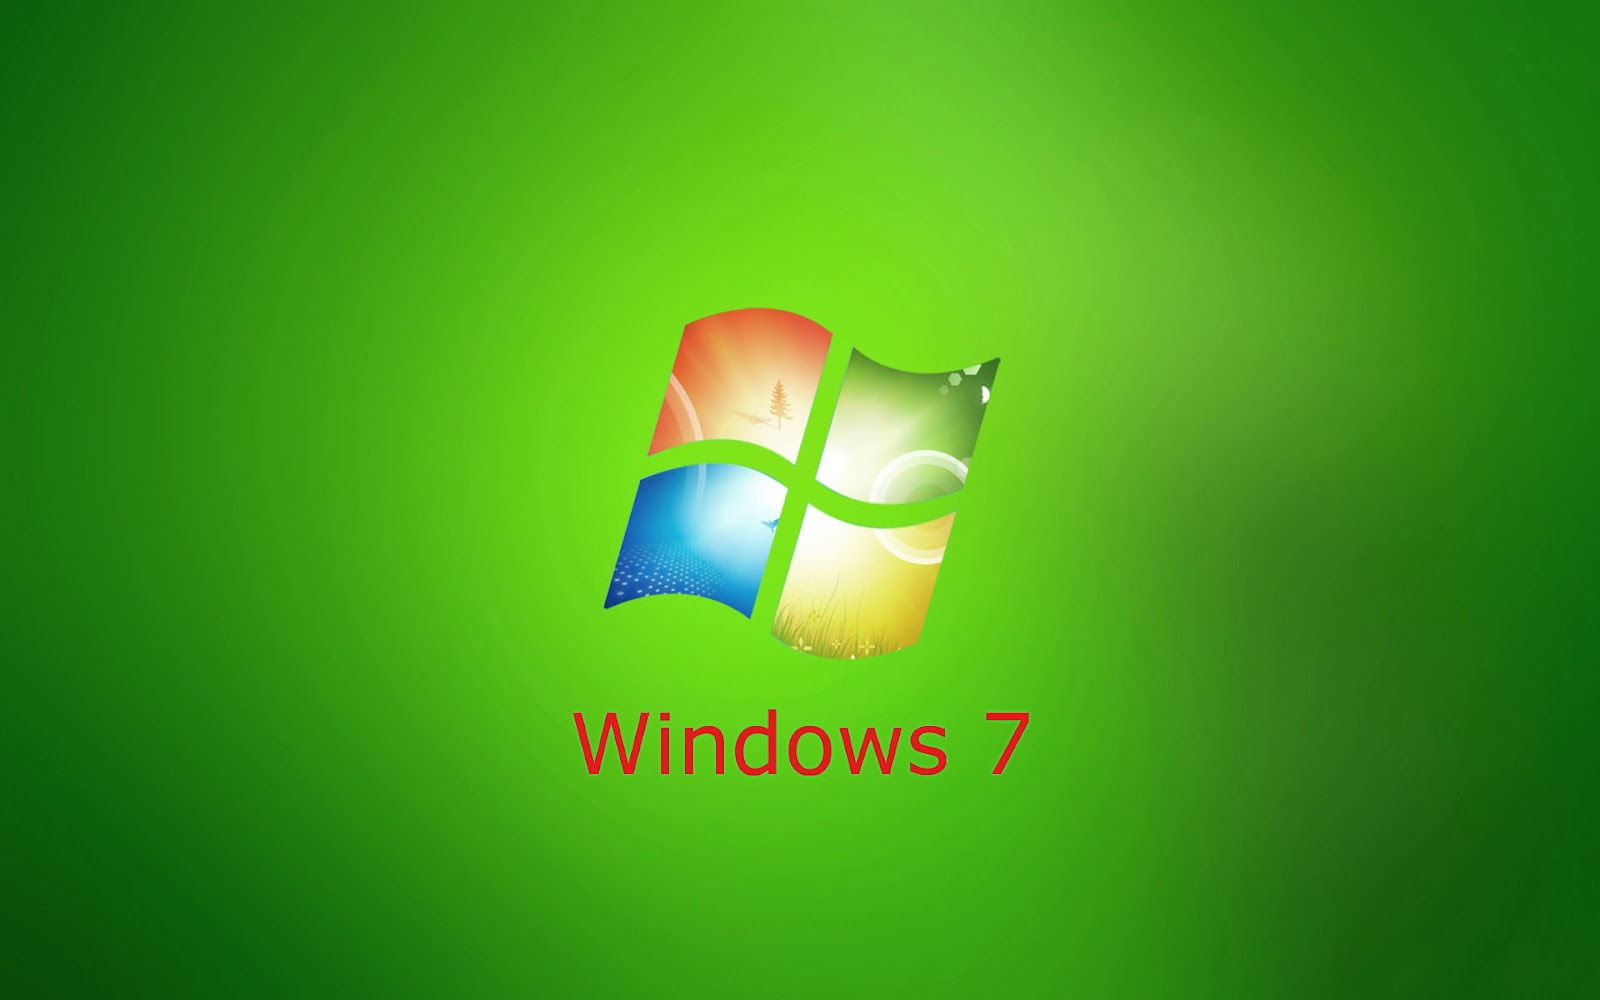 http://3.bp.blogspot.com/-7XRTzMMe2BU/UGQ3YyuzPrI/AAAAAAAAEX0/RVcwGOPtmjQ/s1600/hd-groene-windows-7-wallpaper-hd-groene-windows-7-achtergrond.jpg